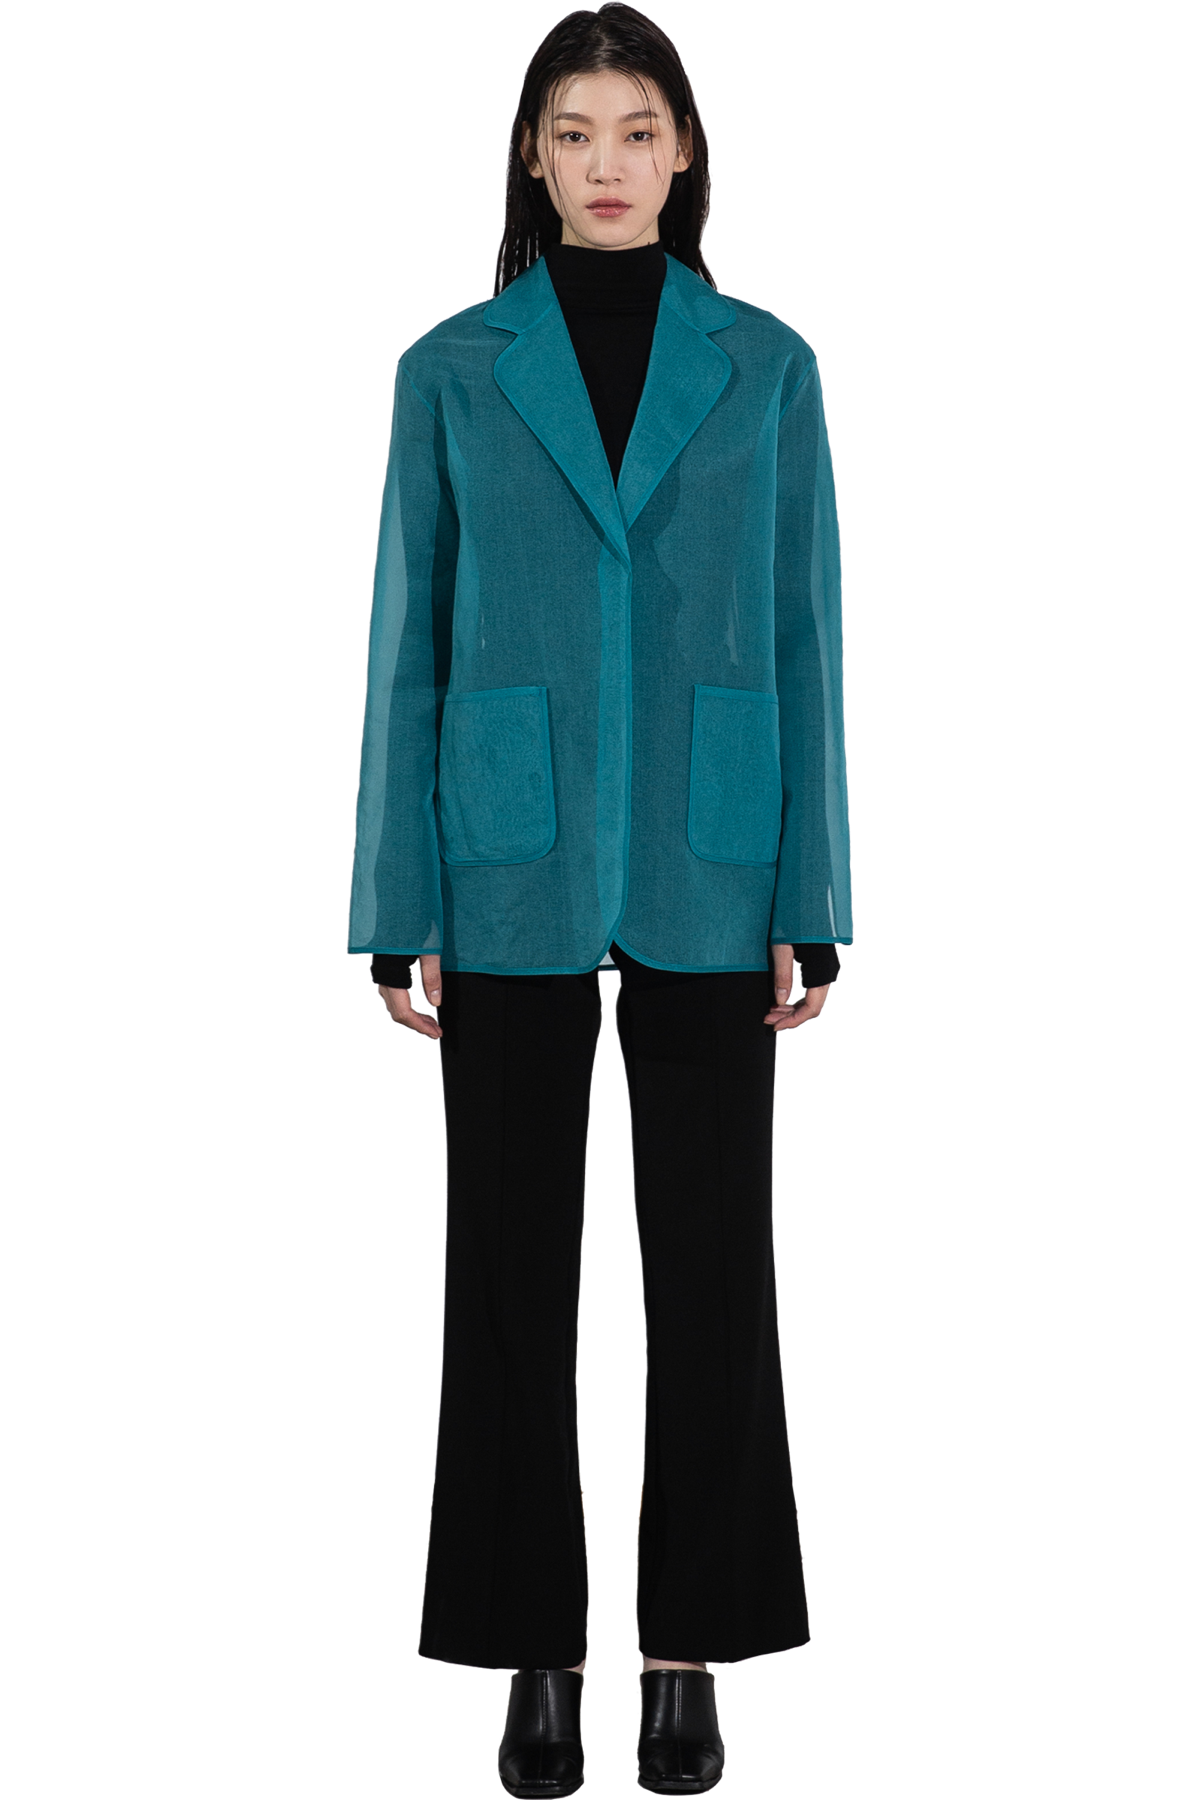 Turquoise Clover Jacket